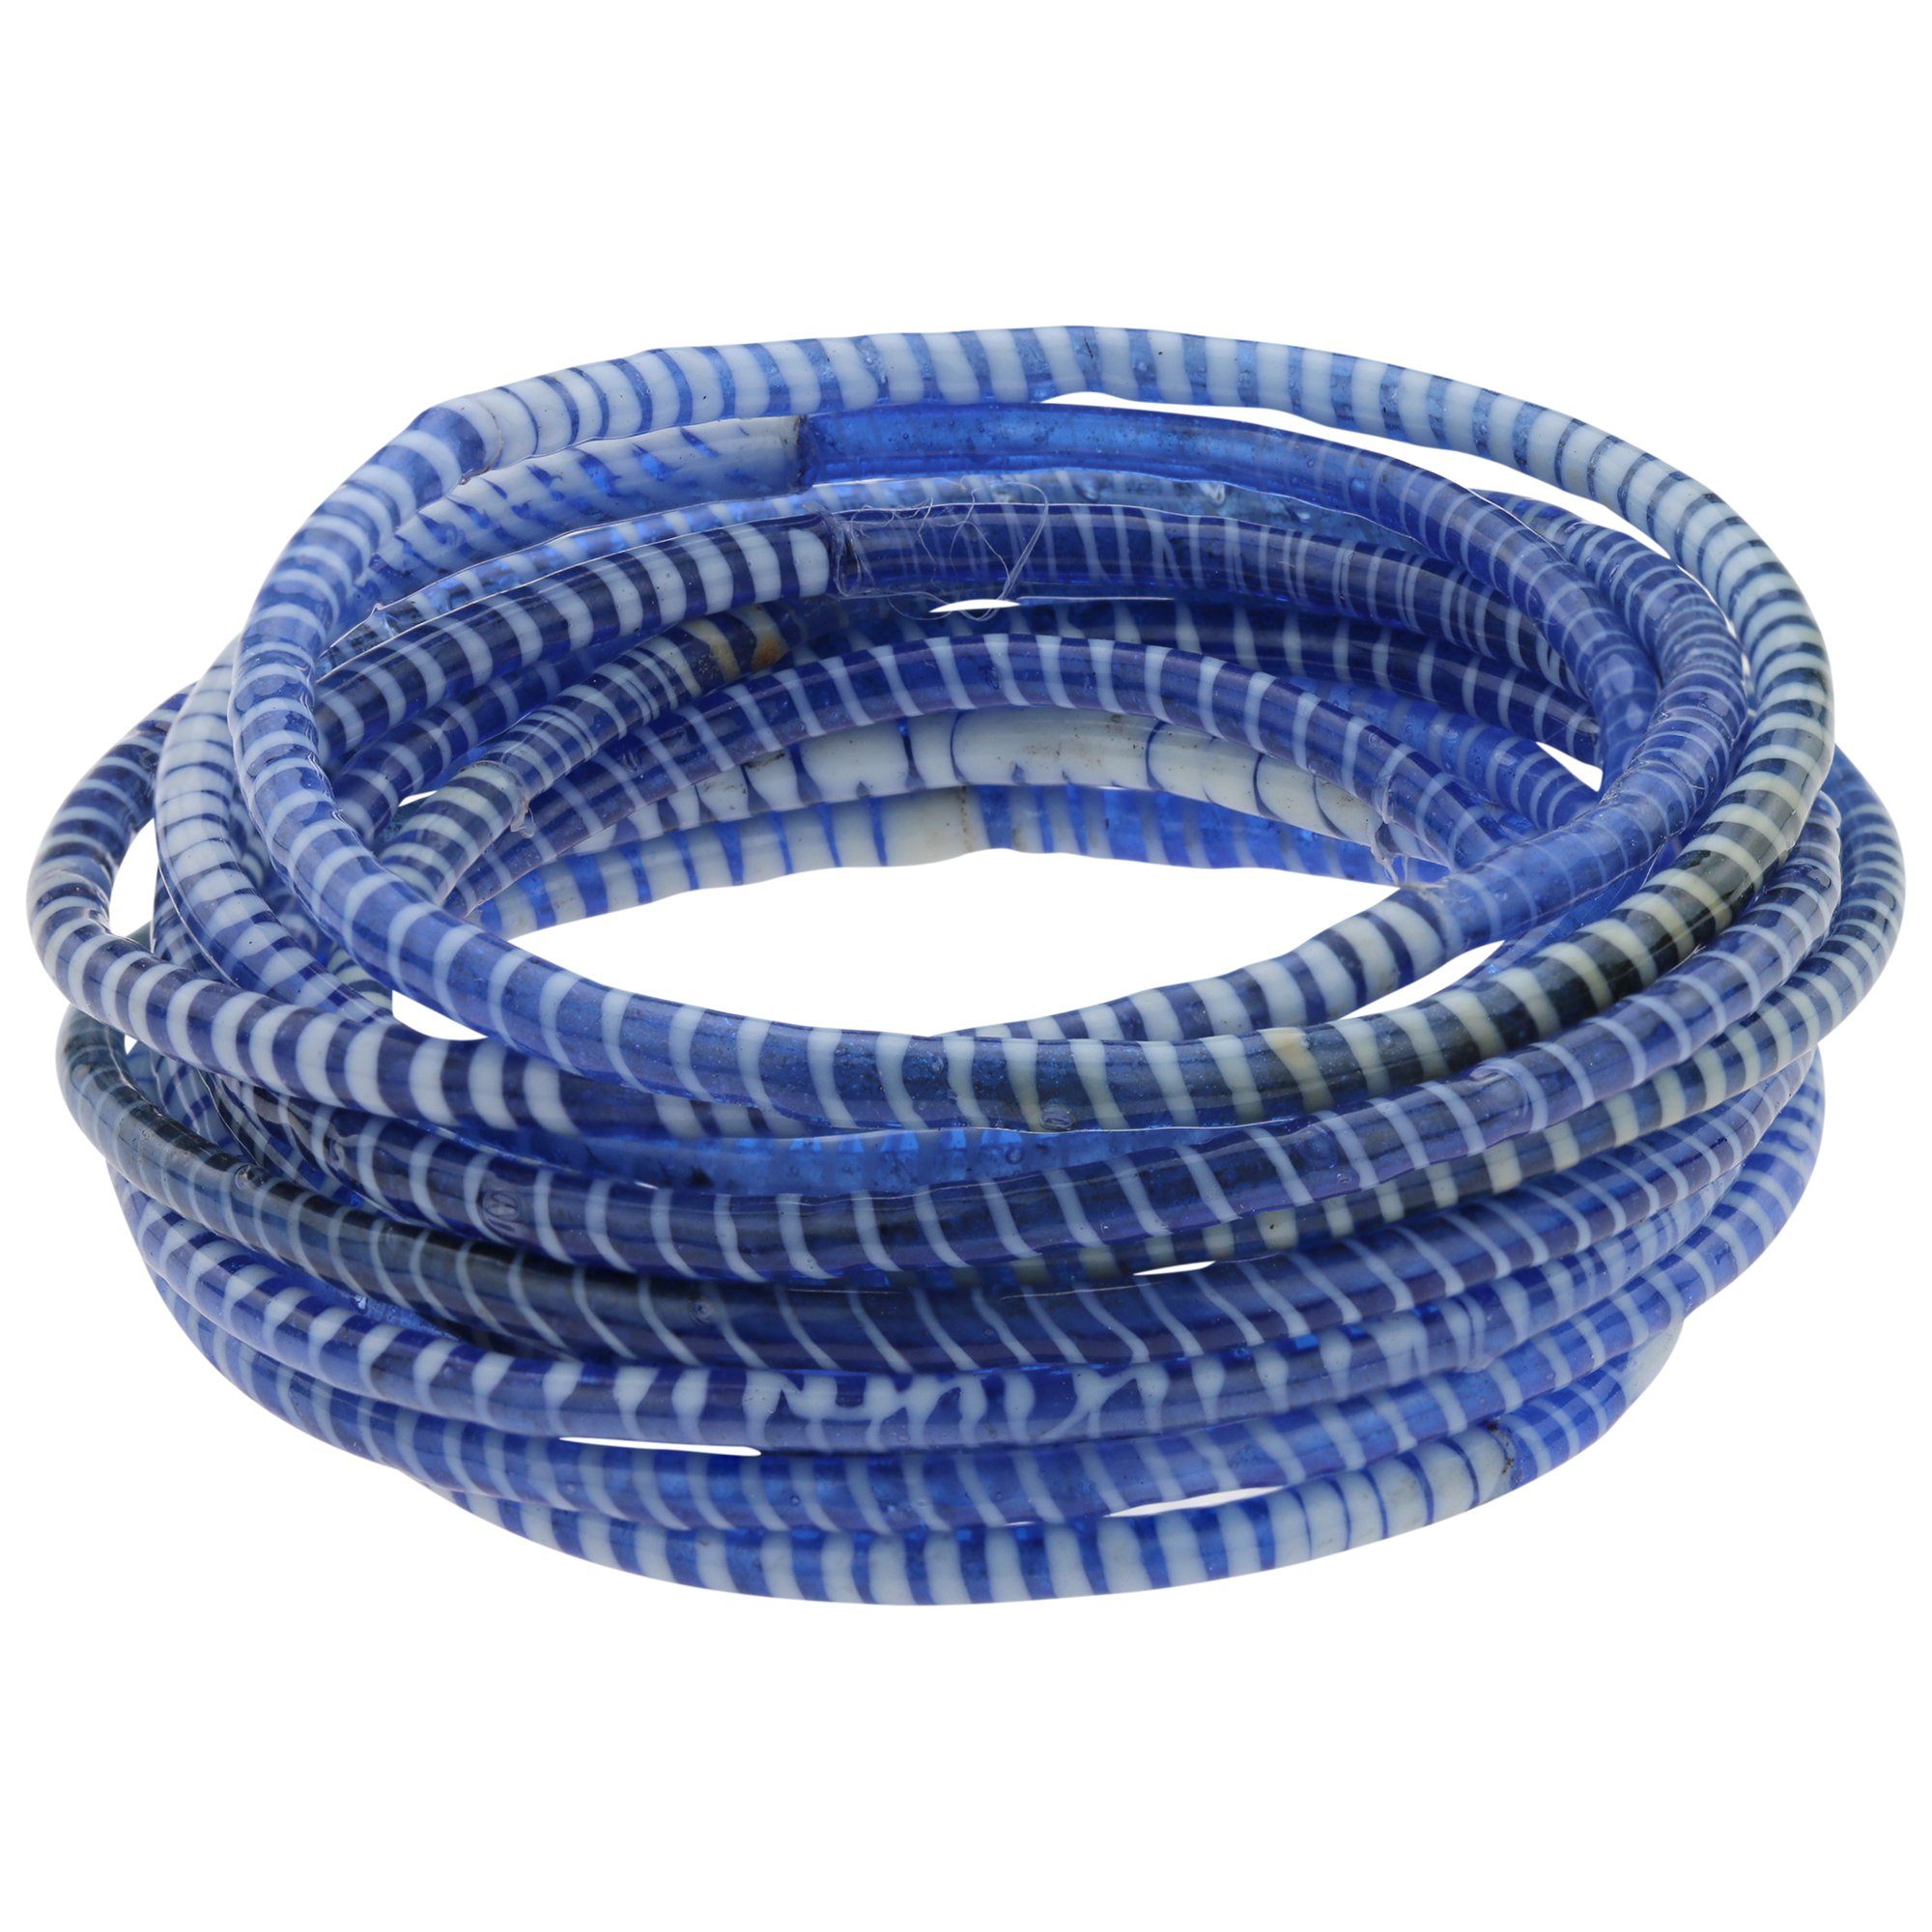 Colors Of Mali Recycled Bracelet - Blue